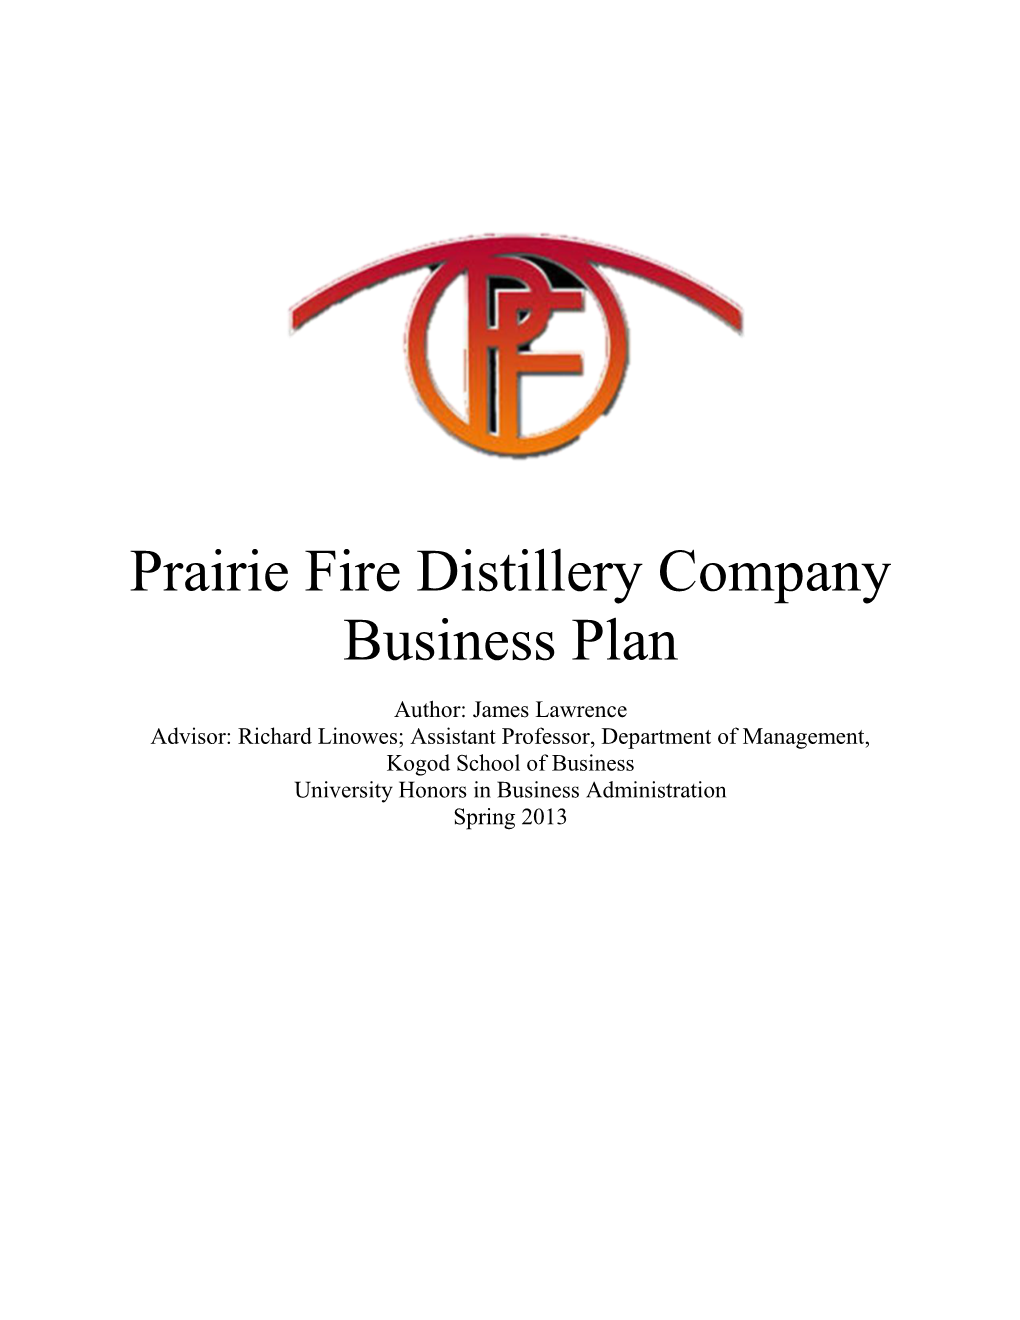 Prairie Fire Distillery Company Business Plan